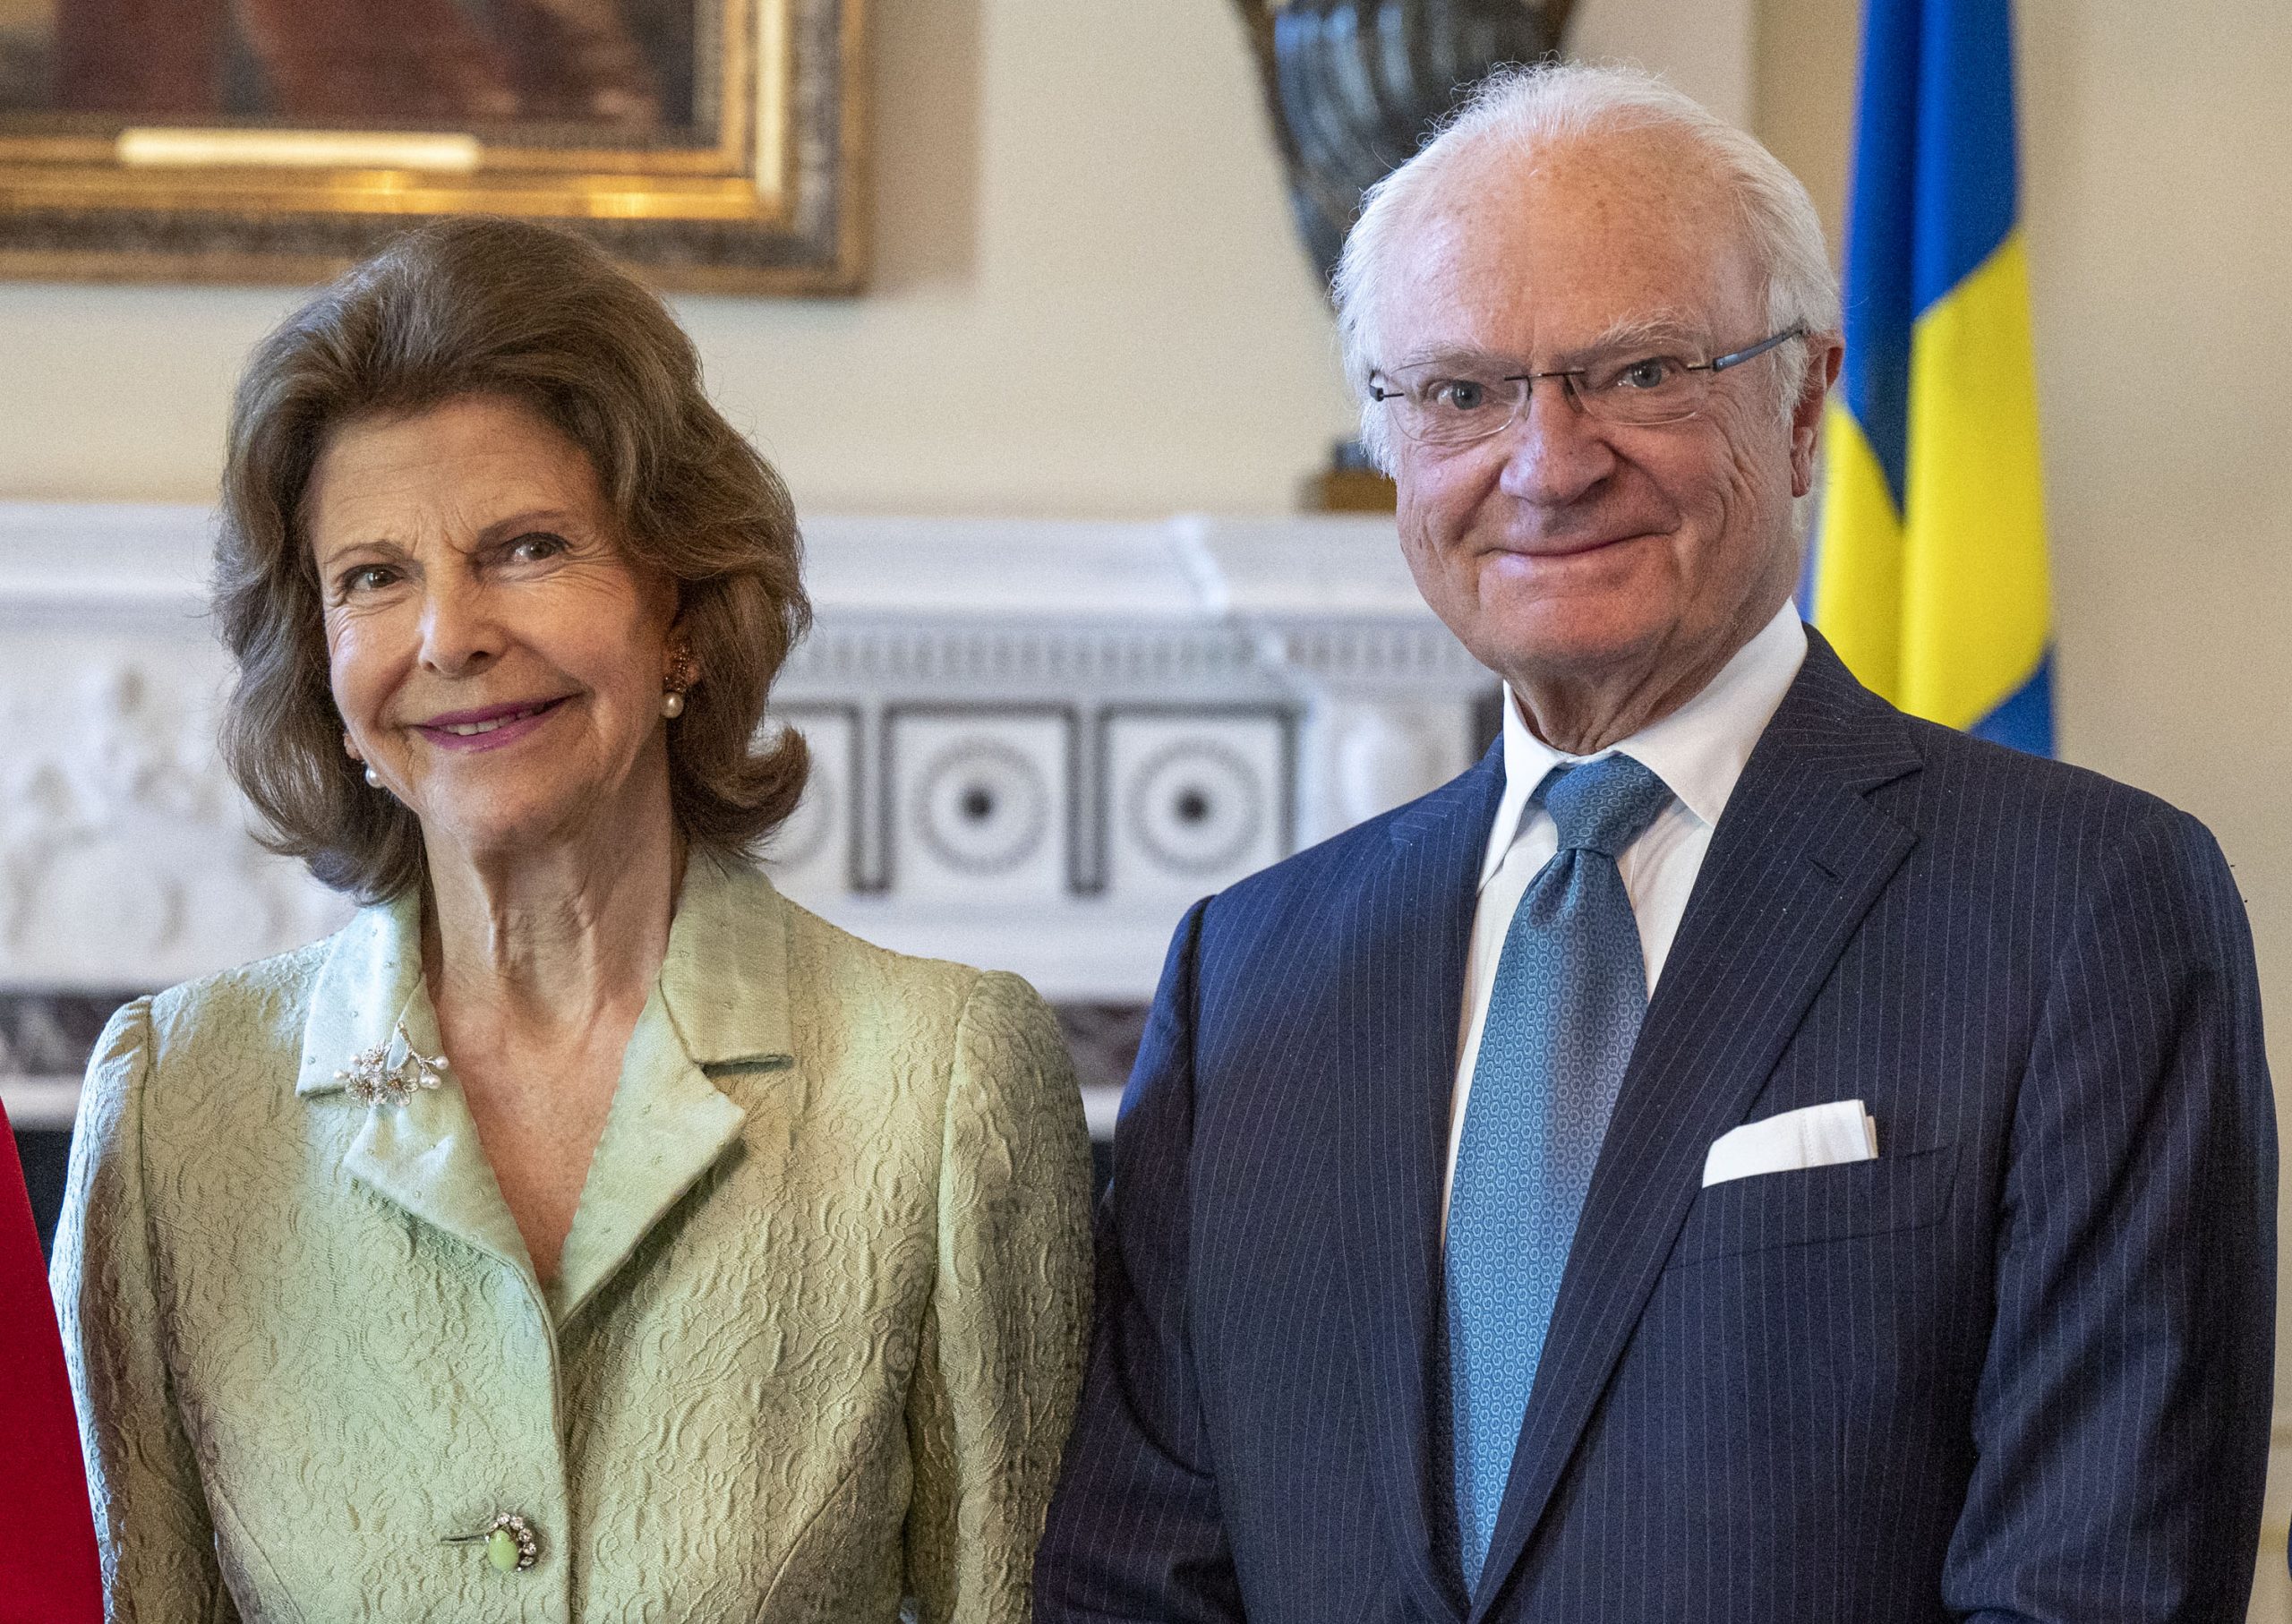 King Carl XVI Gustaf of Sweden photo 2